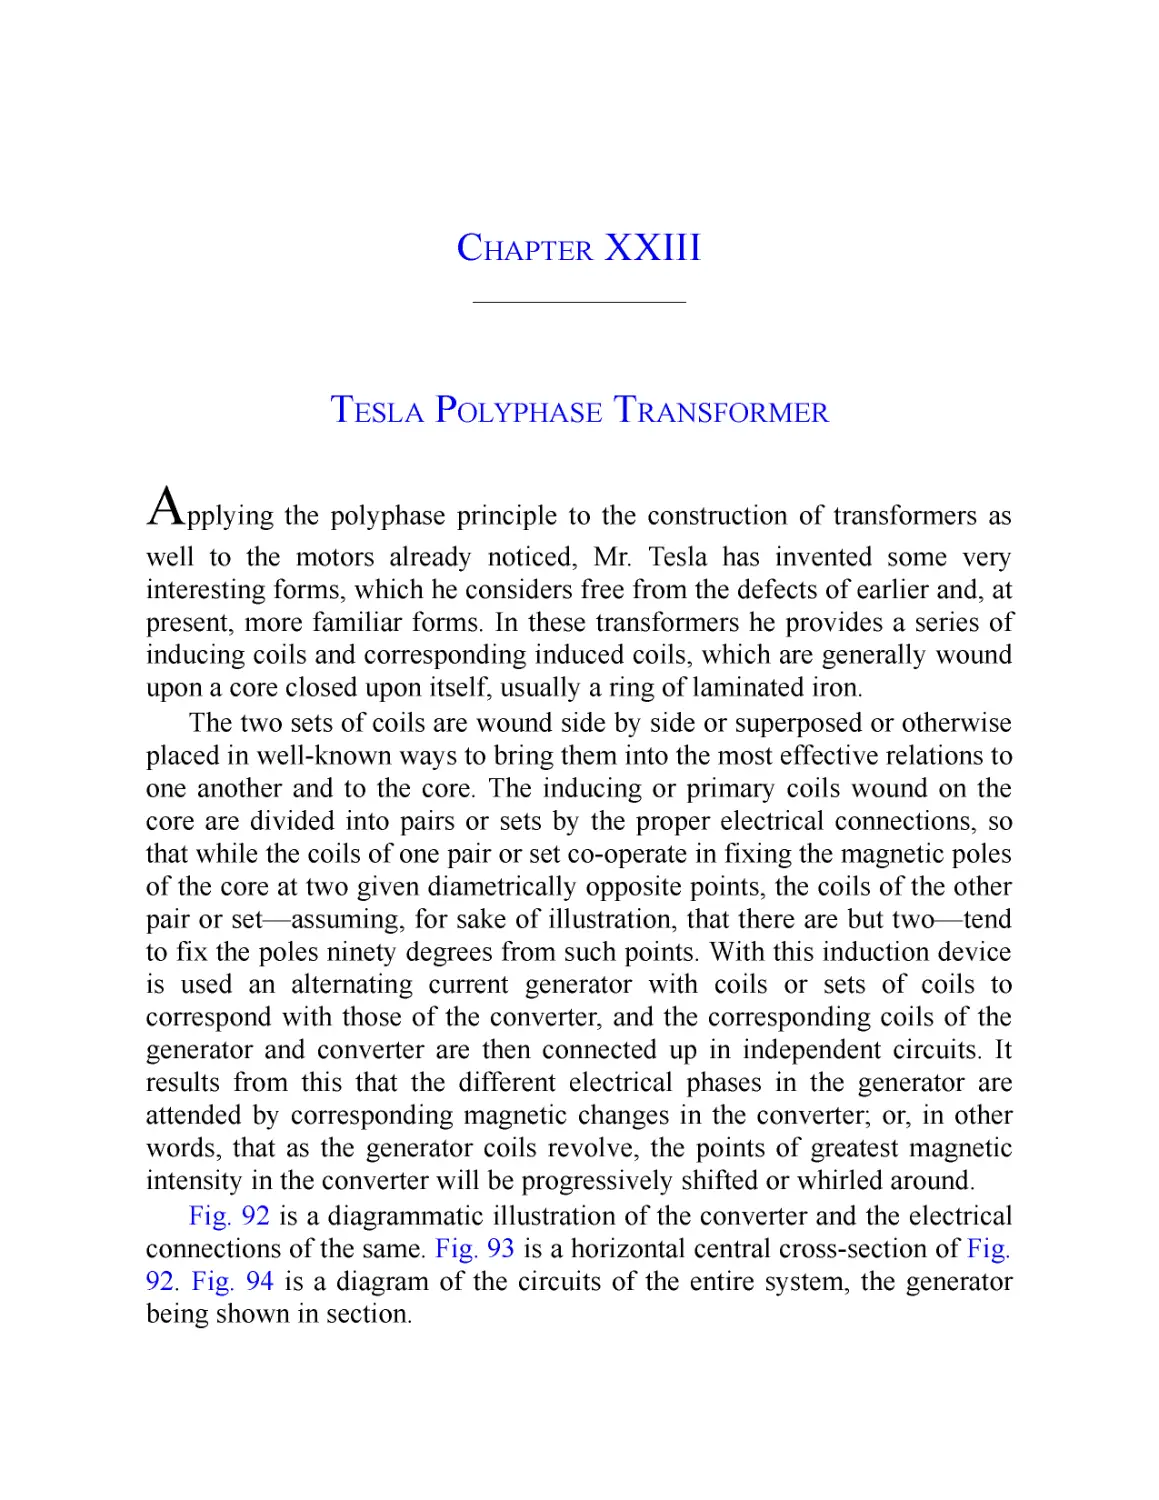 ﻿Chapter XXIII: Tesla Polyphase Transforme